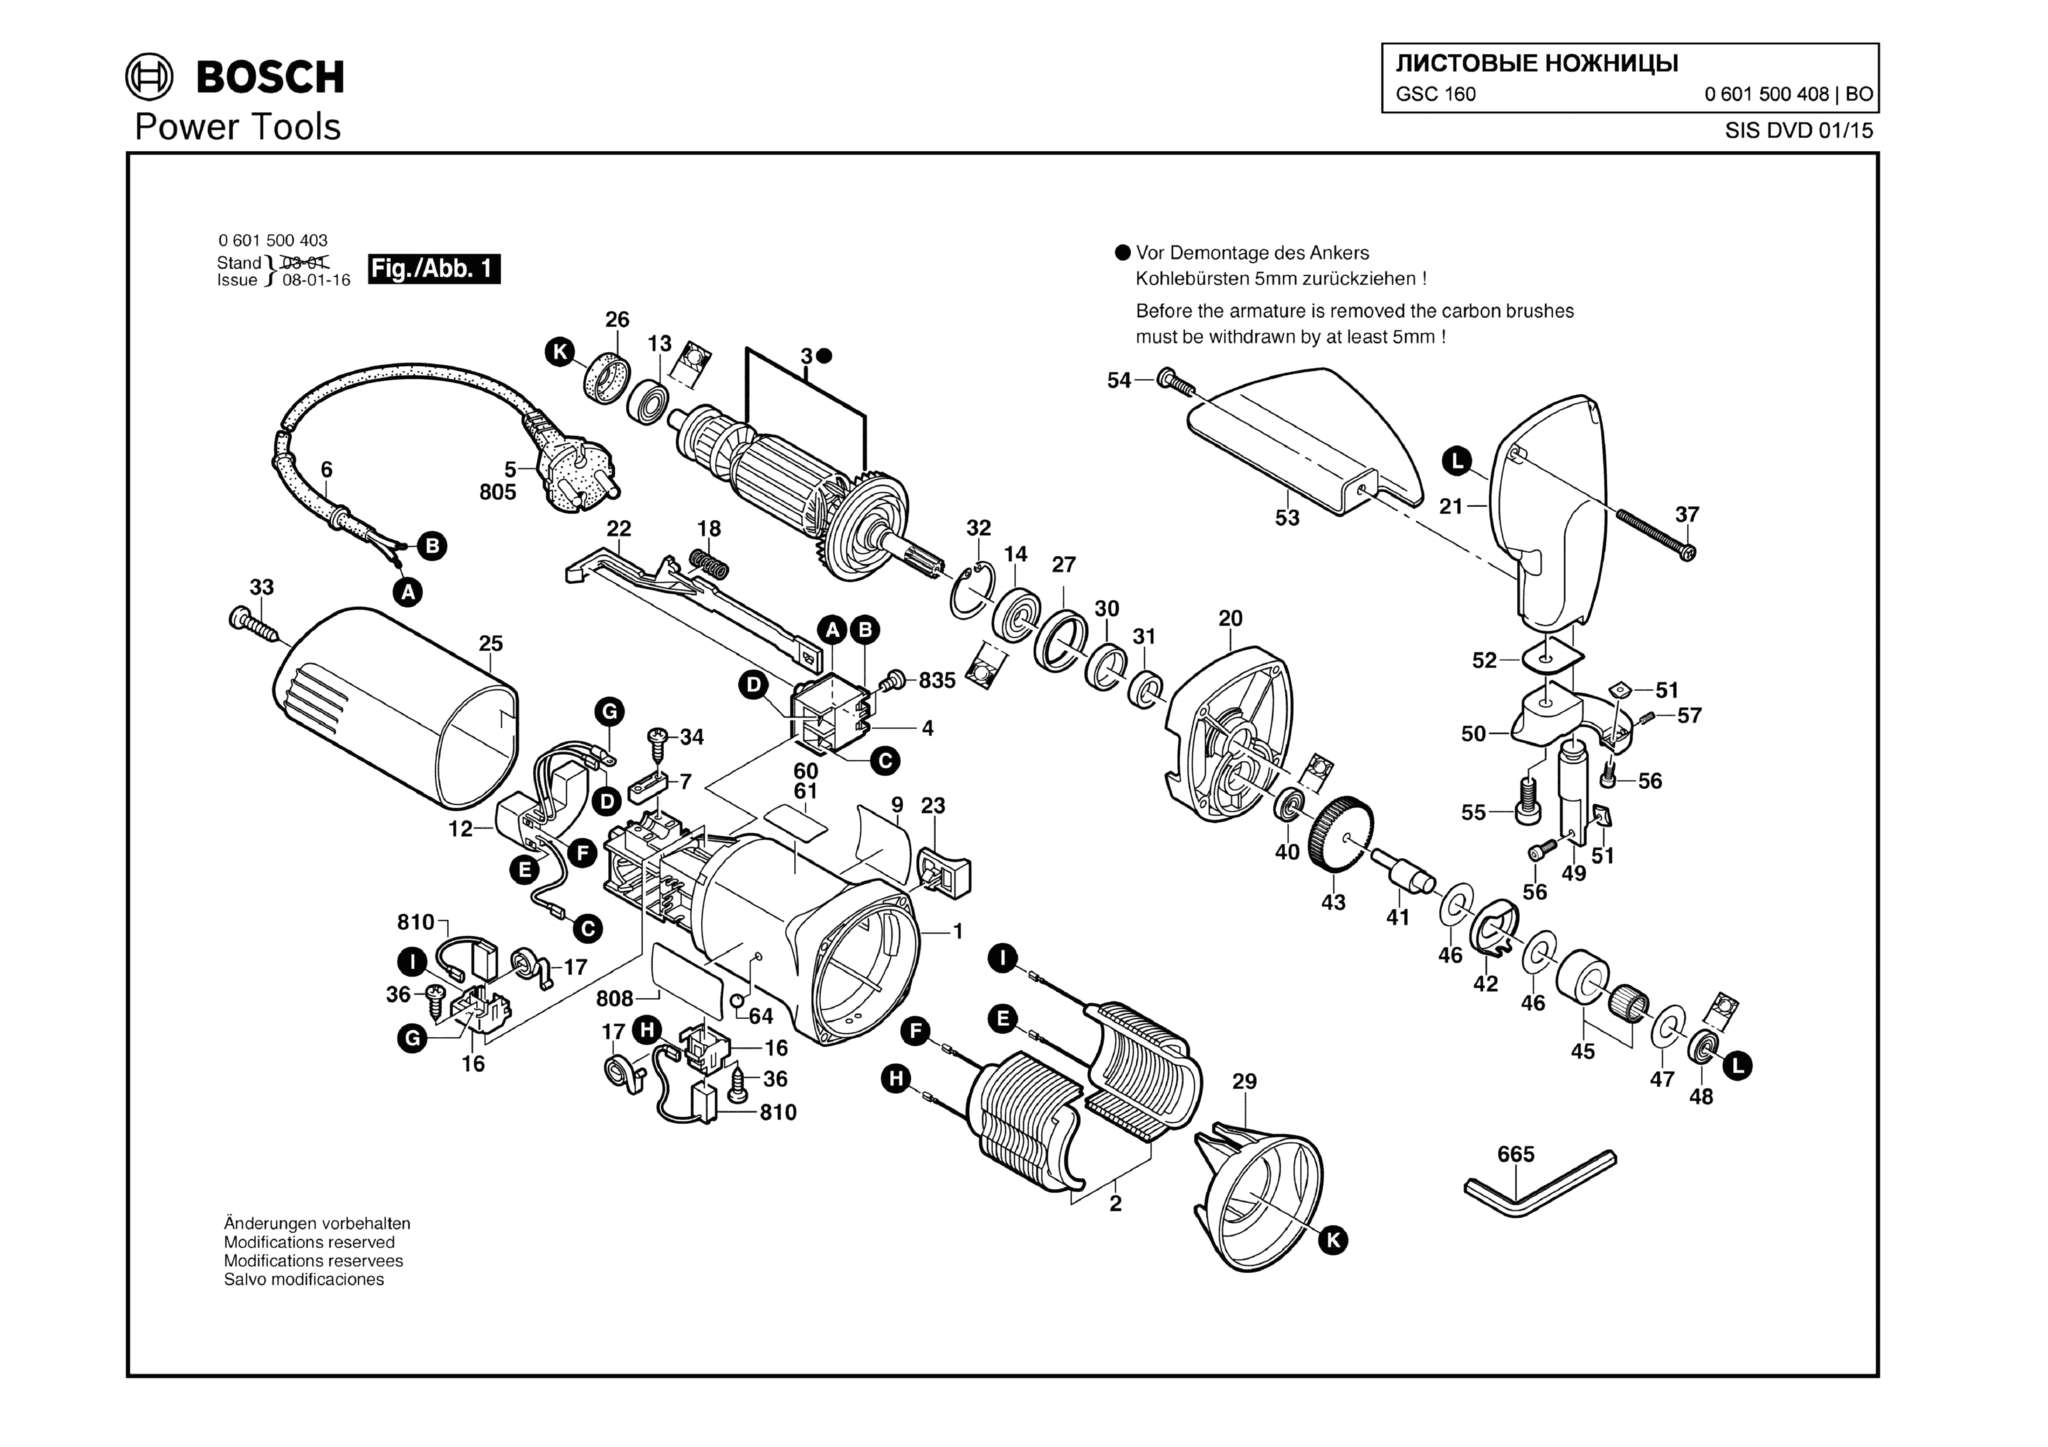 Запчасти, схема и деталировка Bosch GSC 160 (ТИП 0601500408)